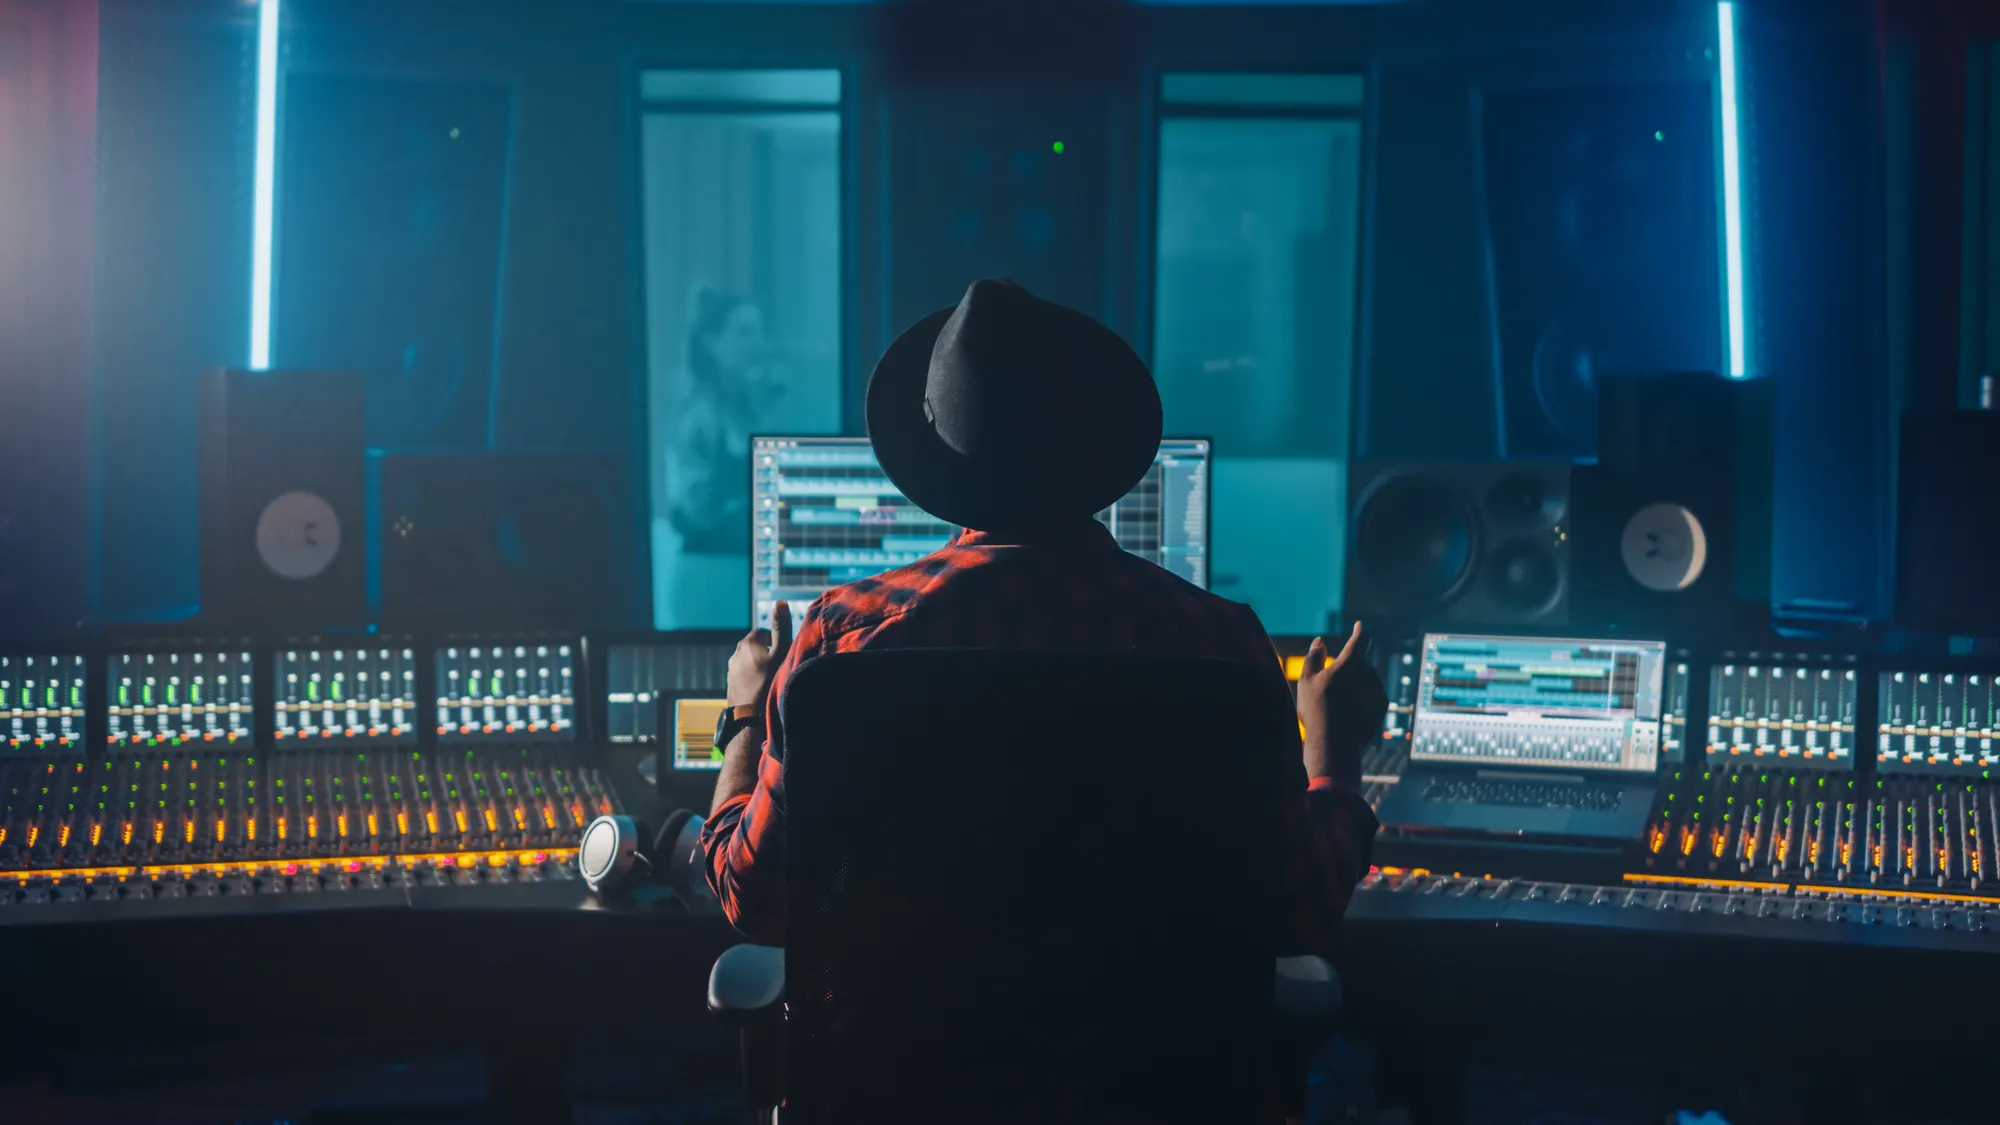 Audio Engineer Uses Control Desk for Recording New Album Track in Music Record Studio.